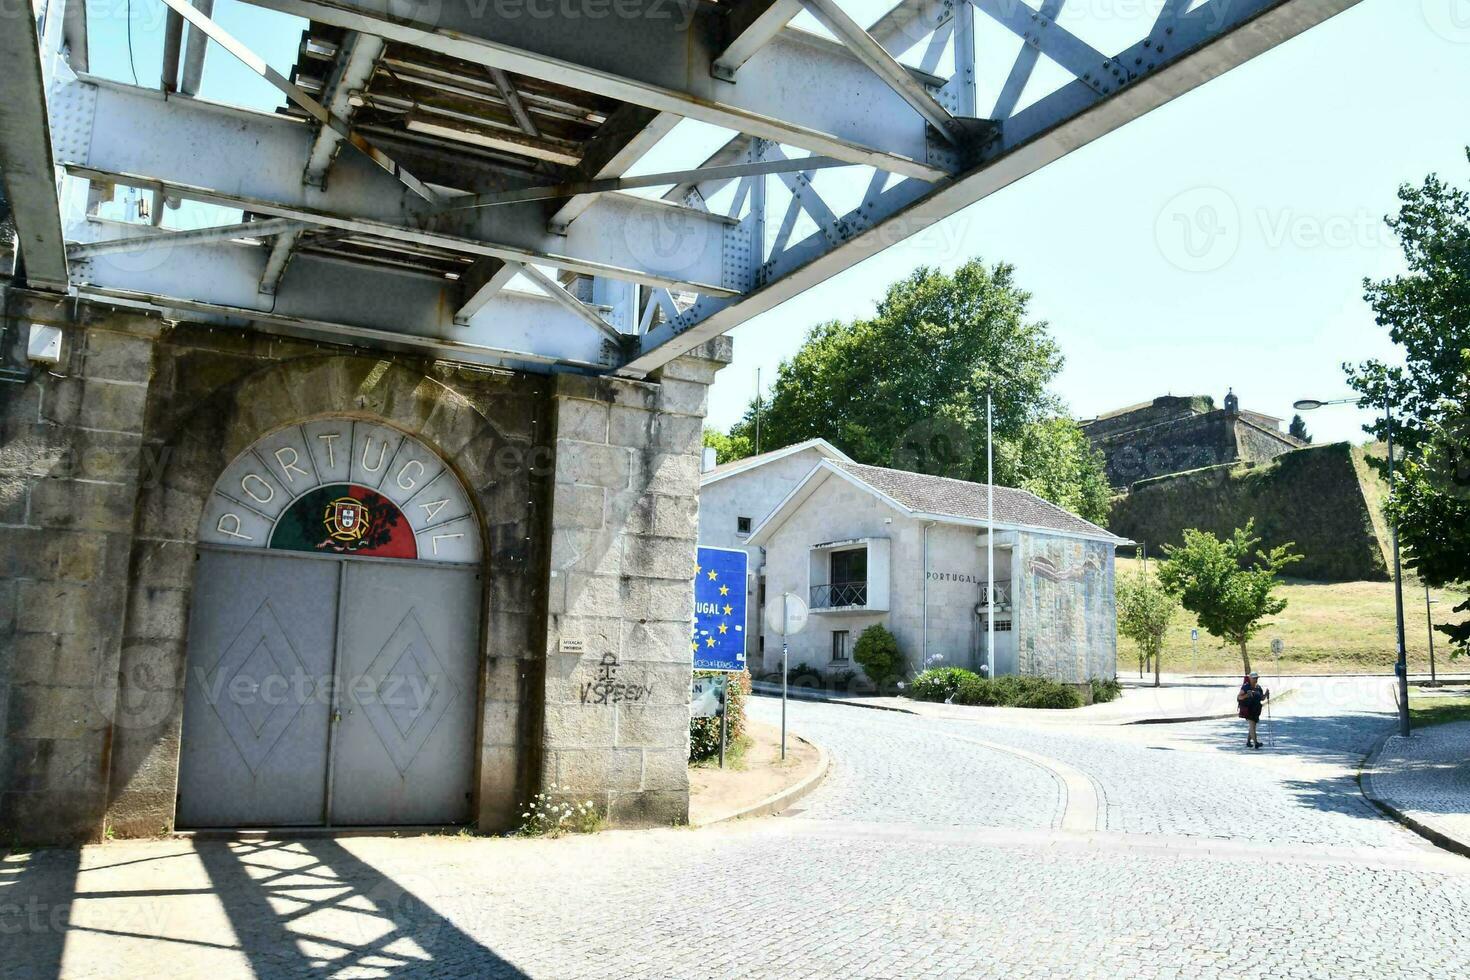 de Ingang onder de brug zegt Portugal foto